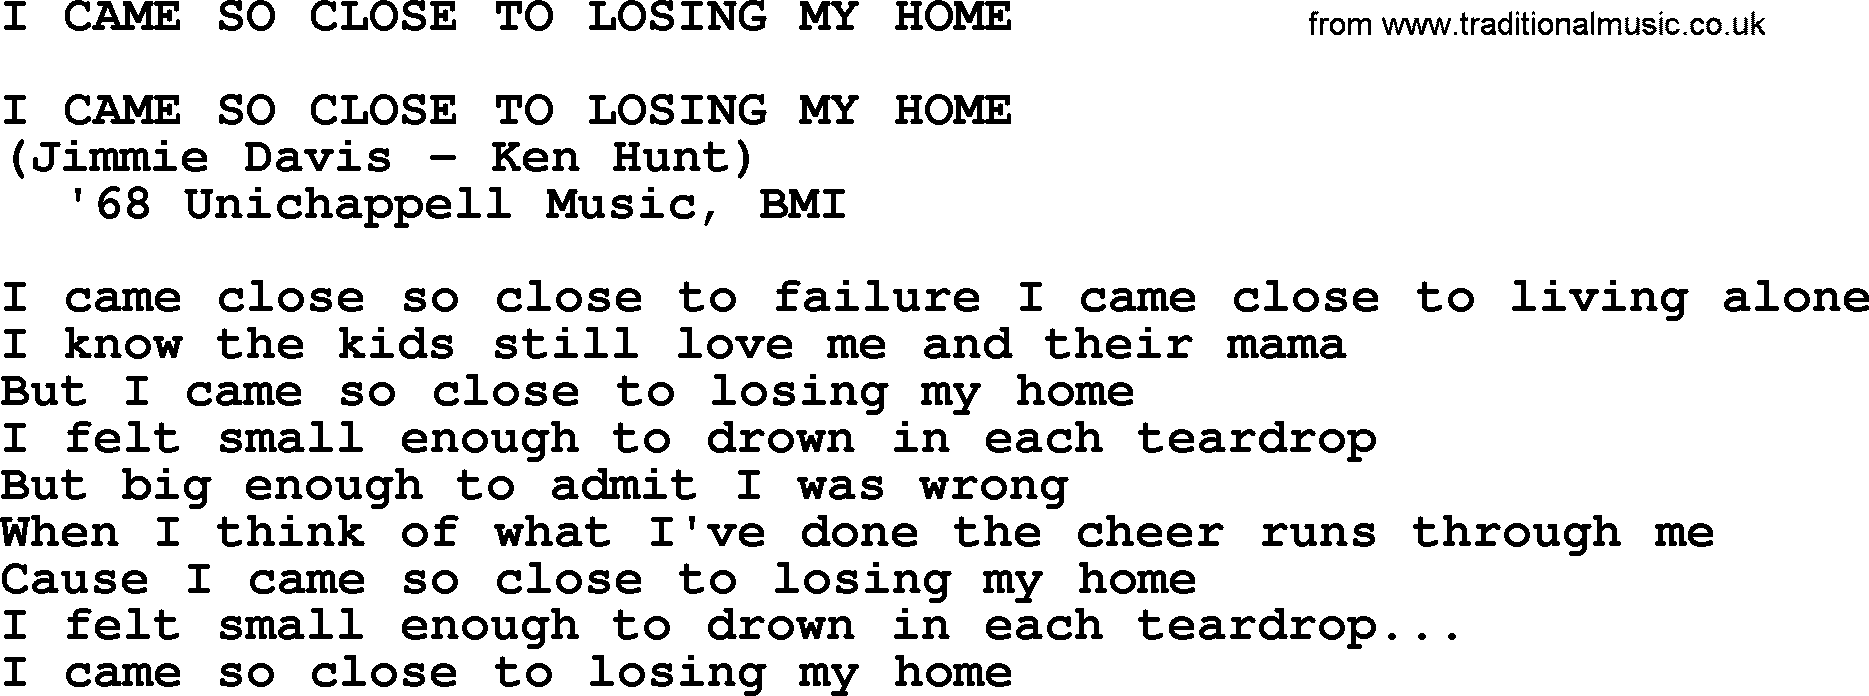 Merle Haggard song: I Came So Close To Losing My Home, lyrics.